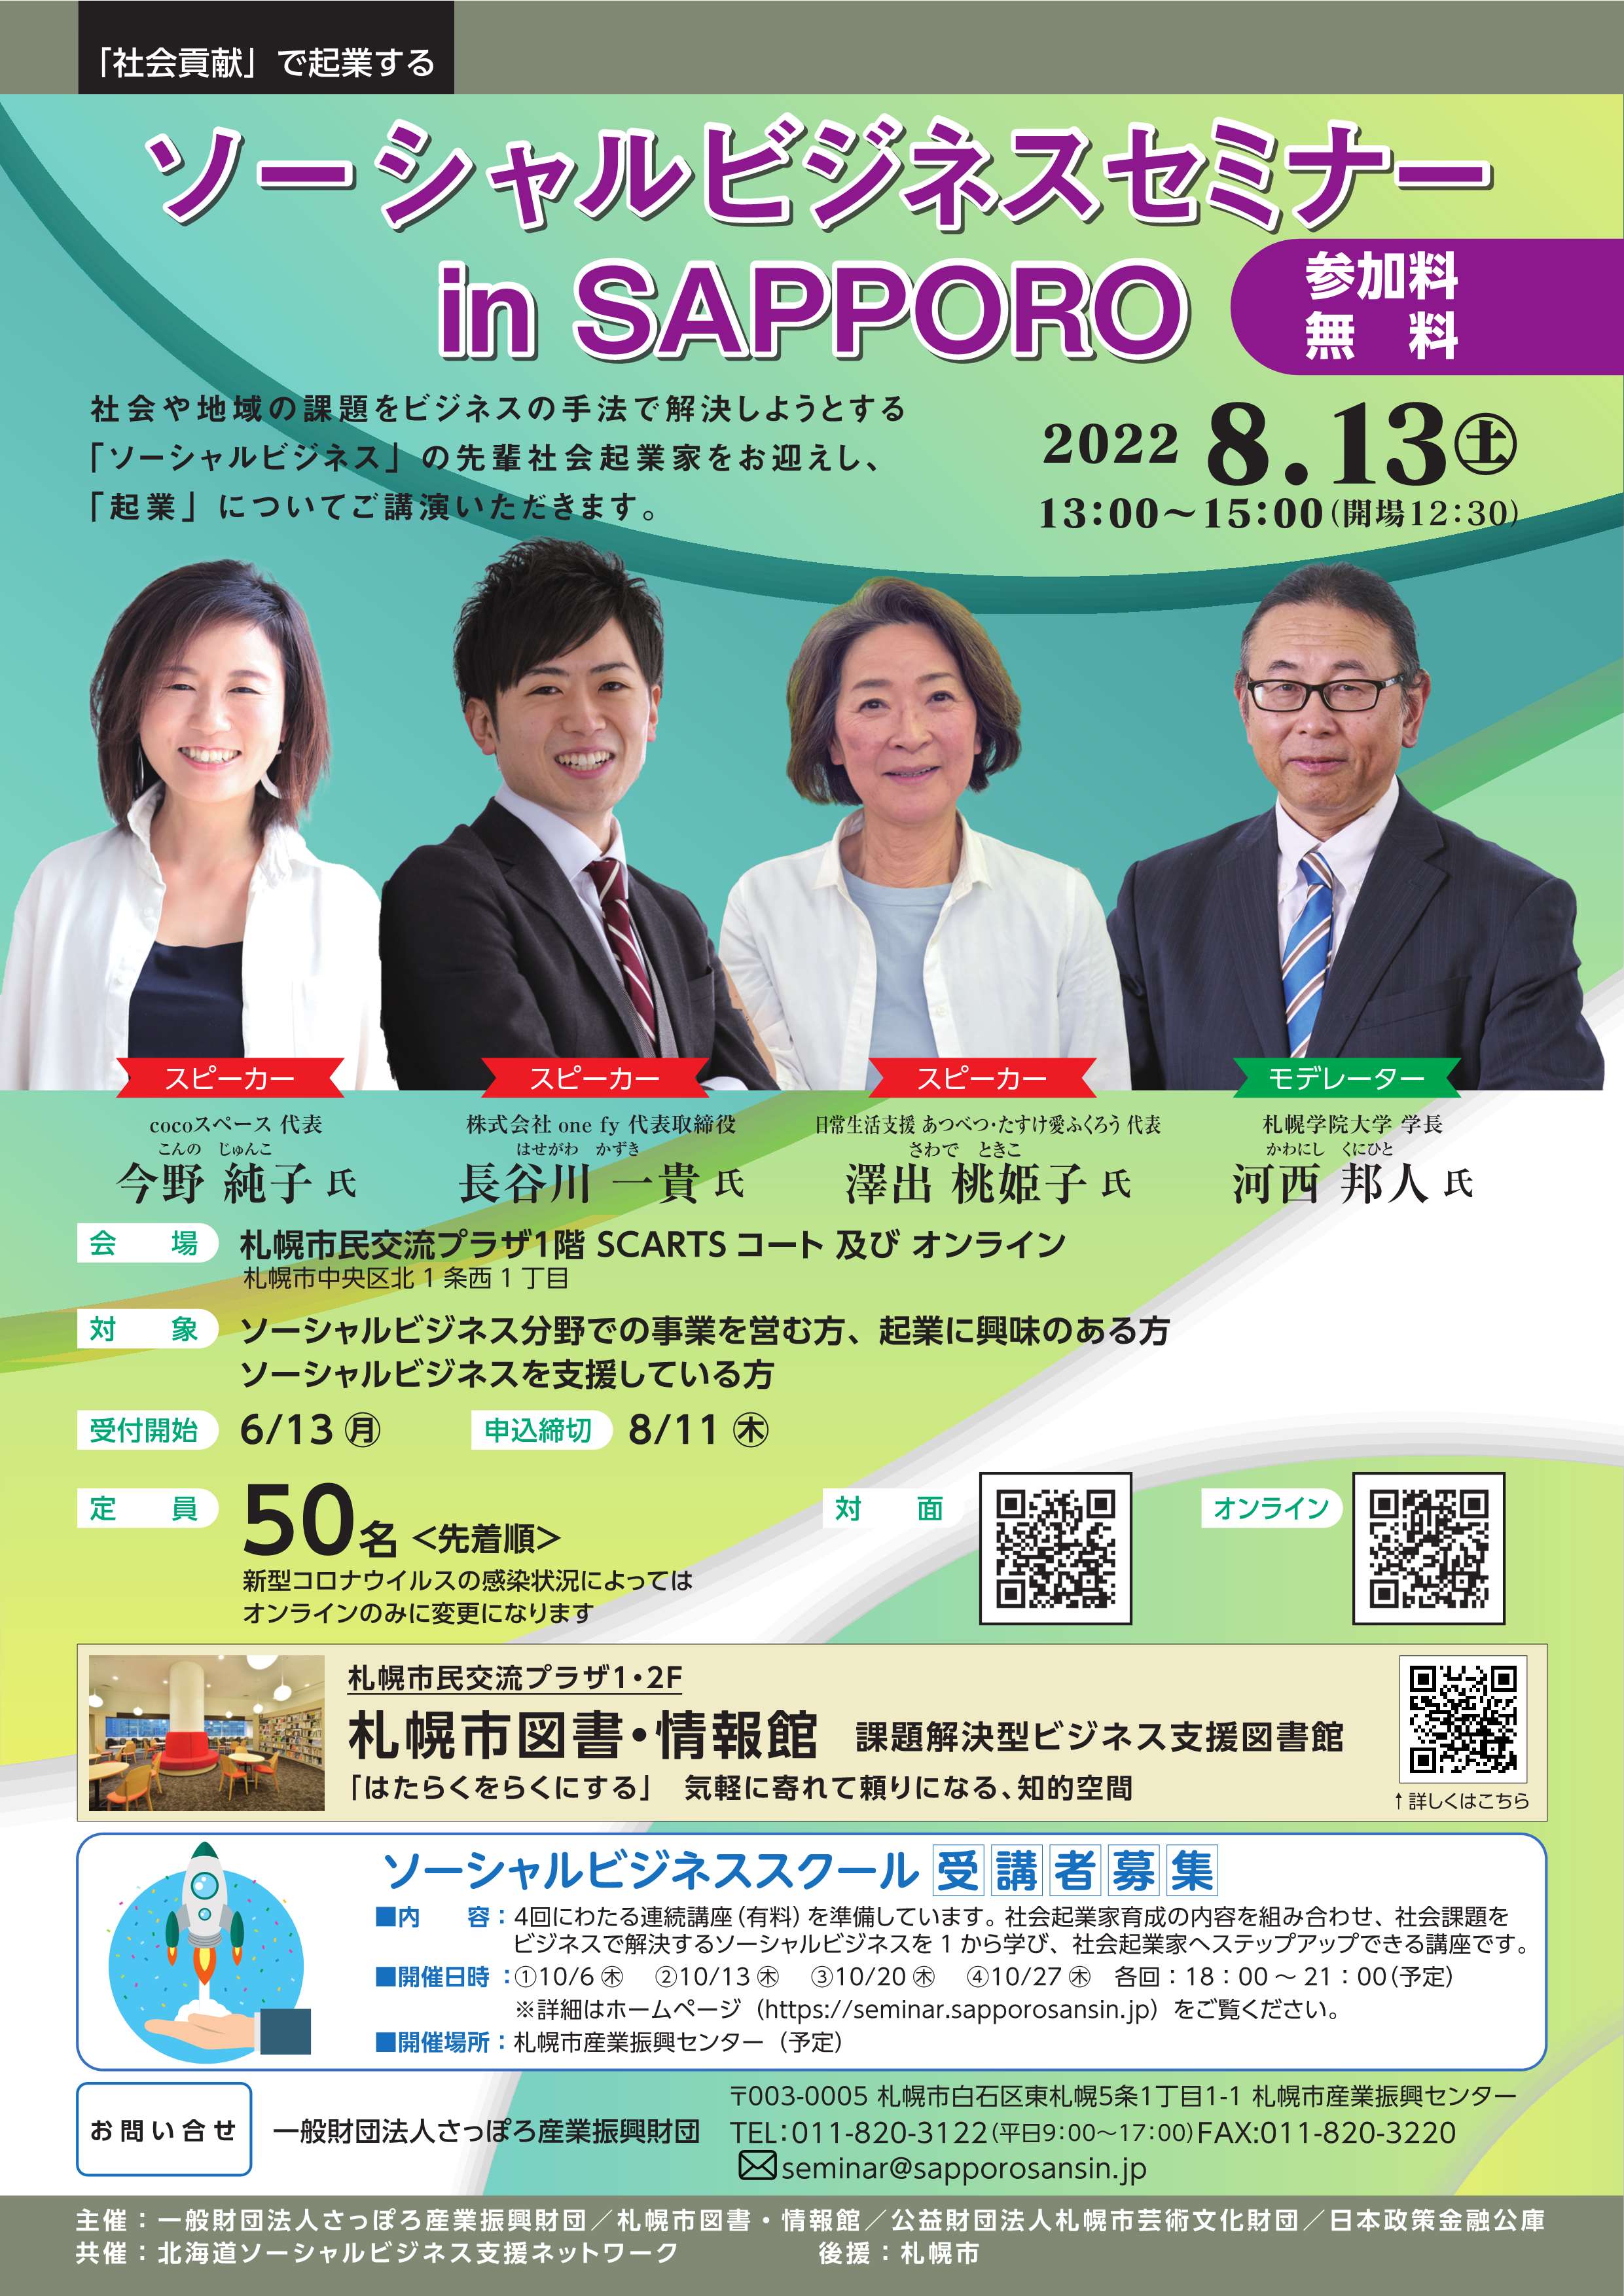 Social Business Seminar in Sapporoimage